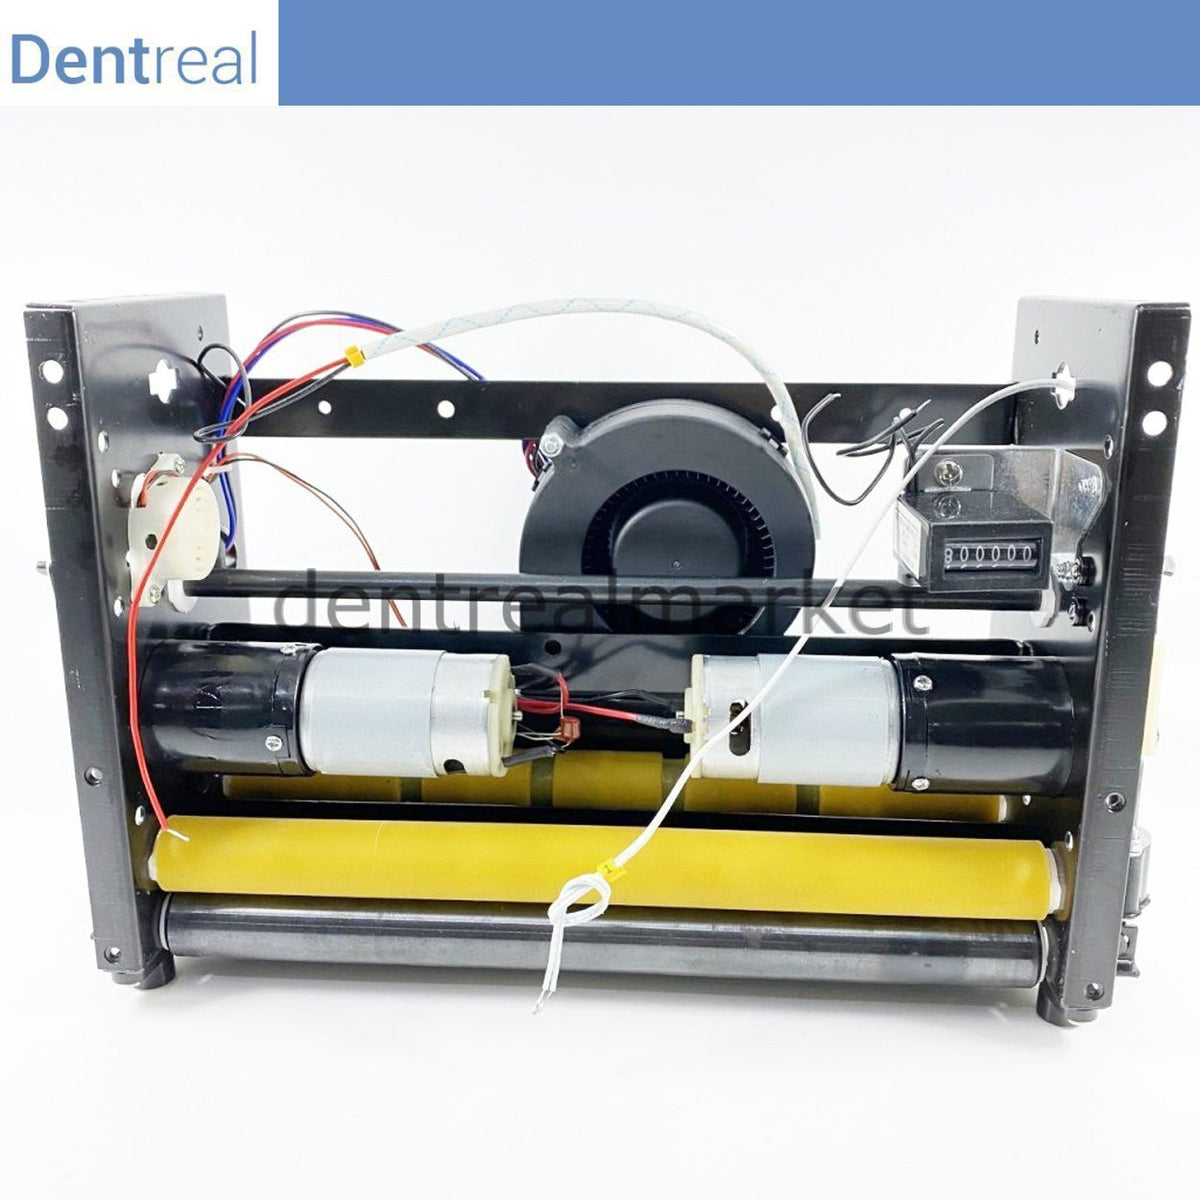 DentrealStore - Dentreal Motors and Cutter mechanism for XT-46C Automatic Shoe Shoe Machine